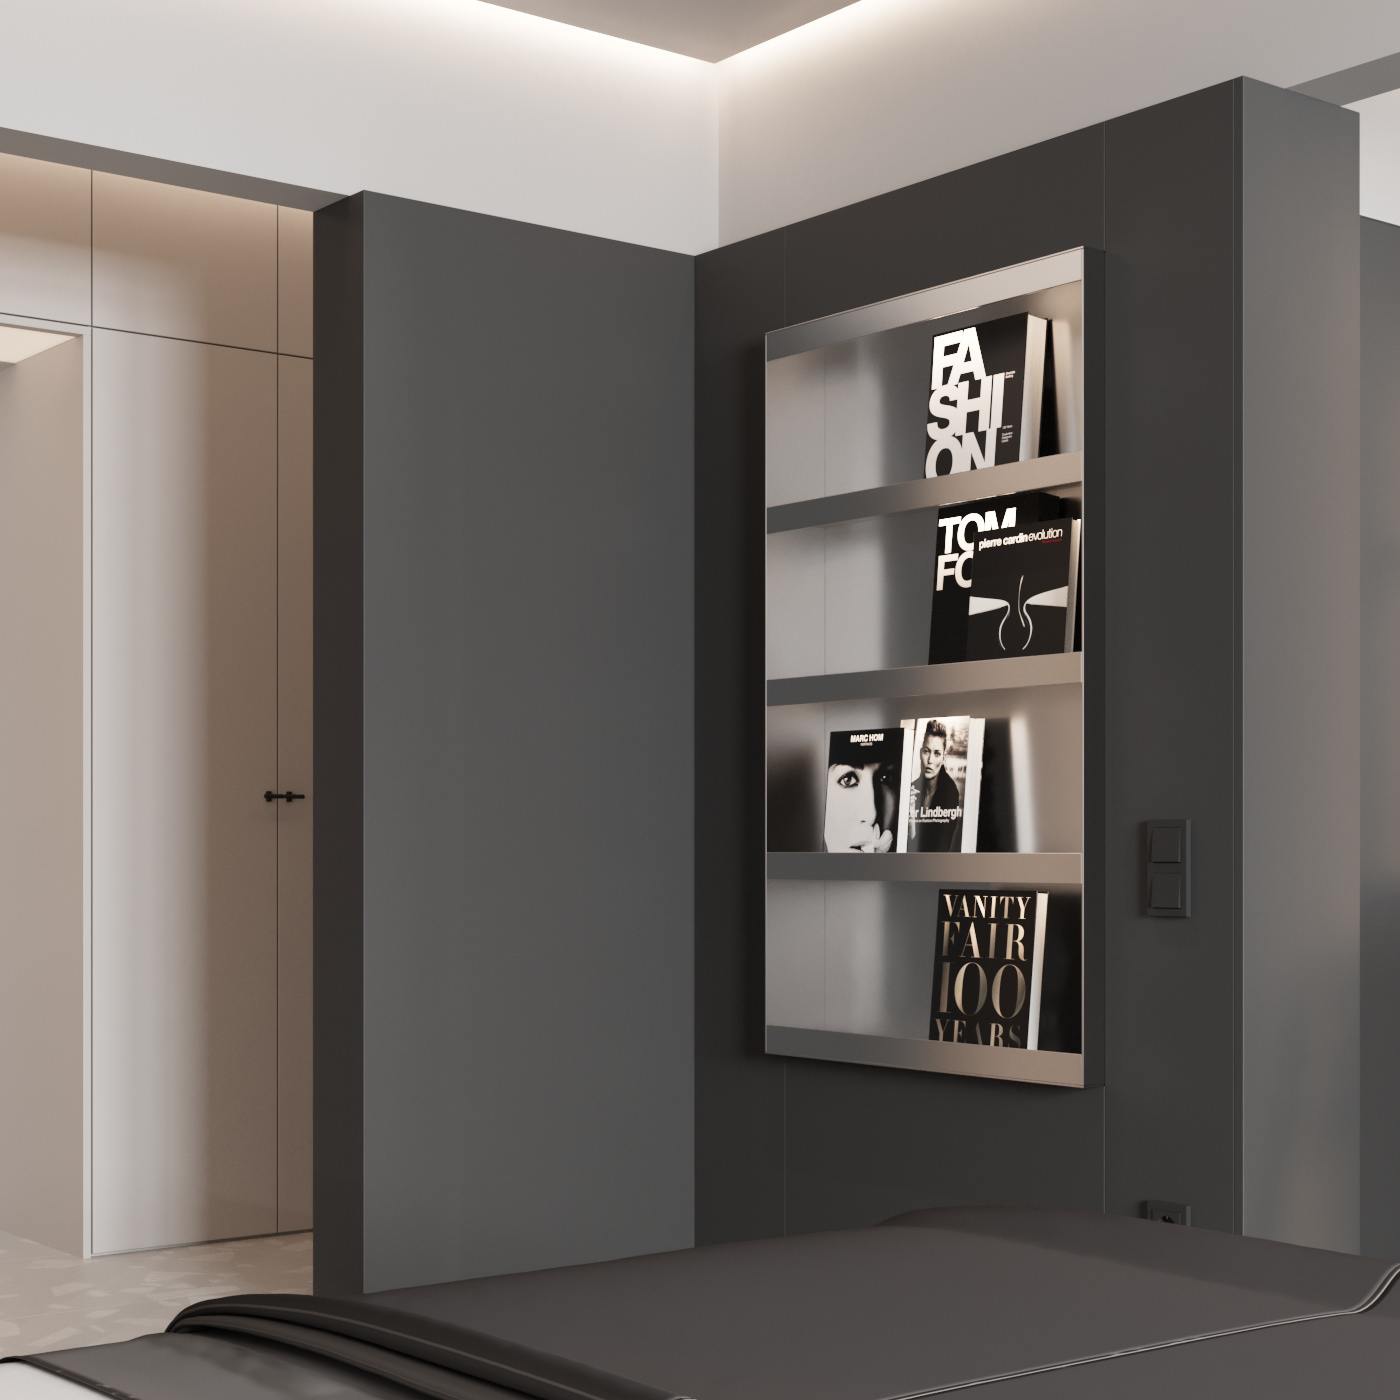 3ds max architecture archviz corona Interior interior design  Render visualization